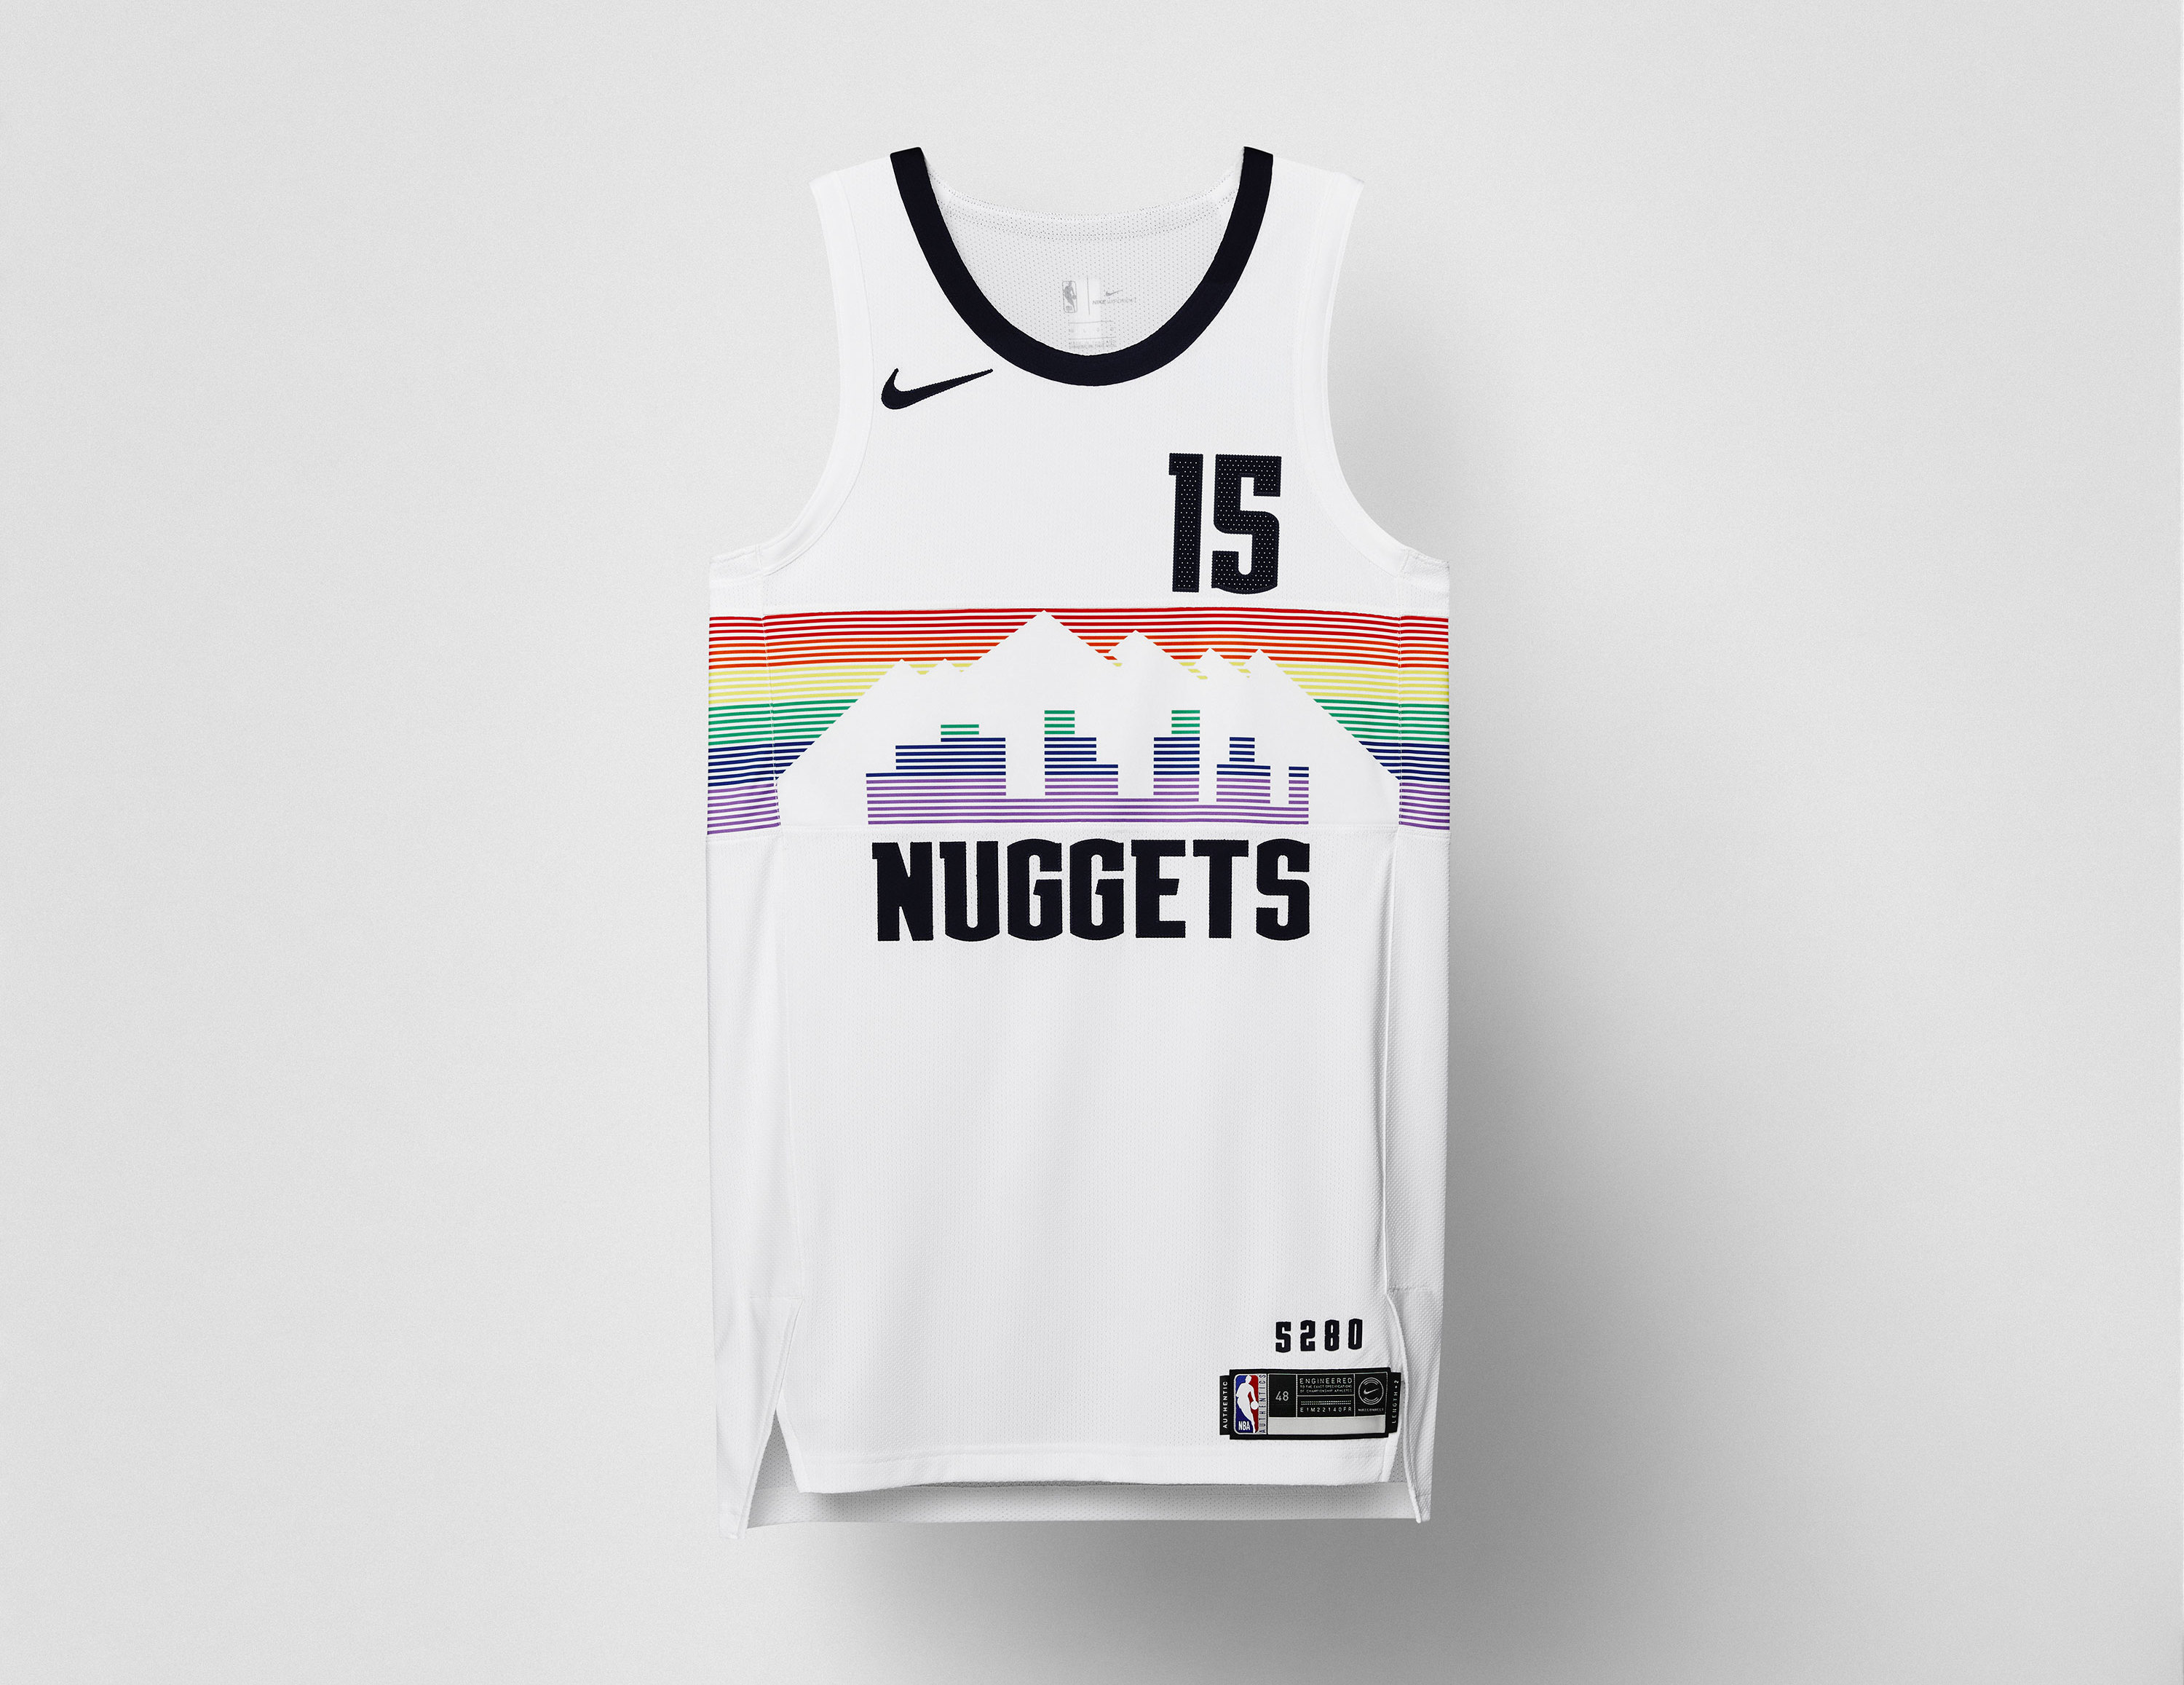 Nike NBA City Edition uniforms for 2018-19 season